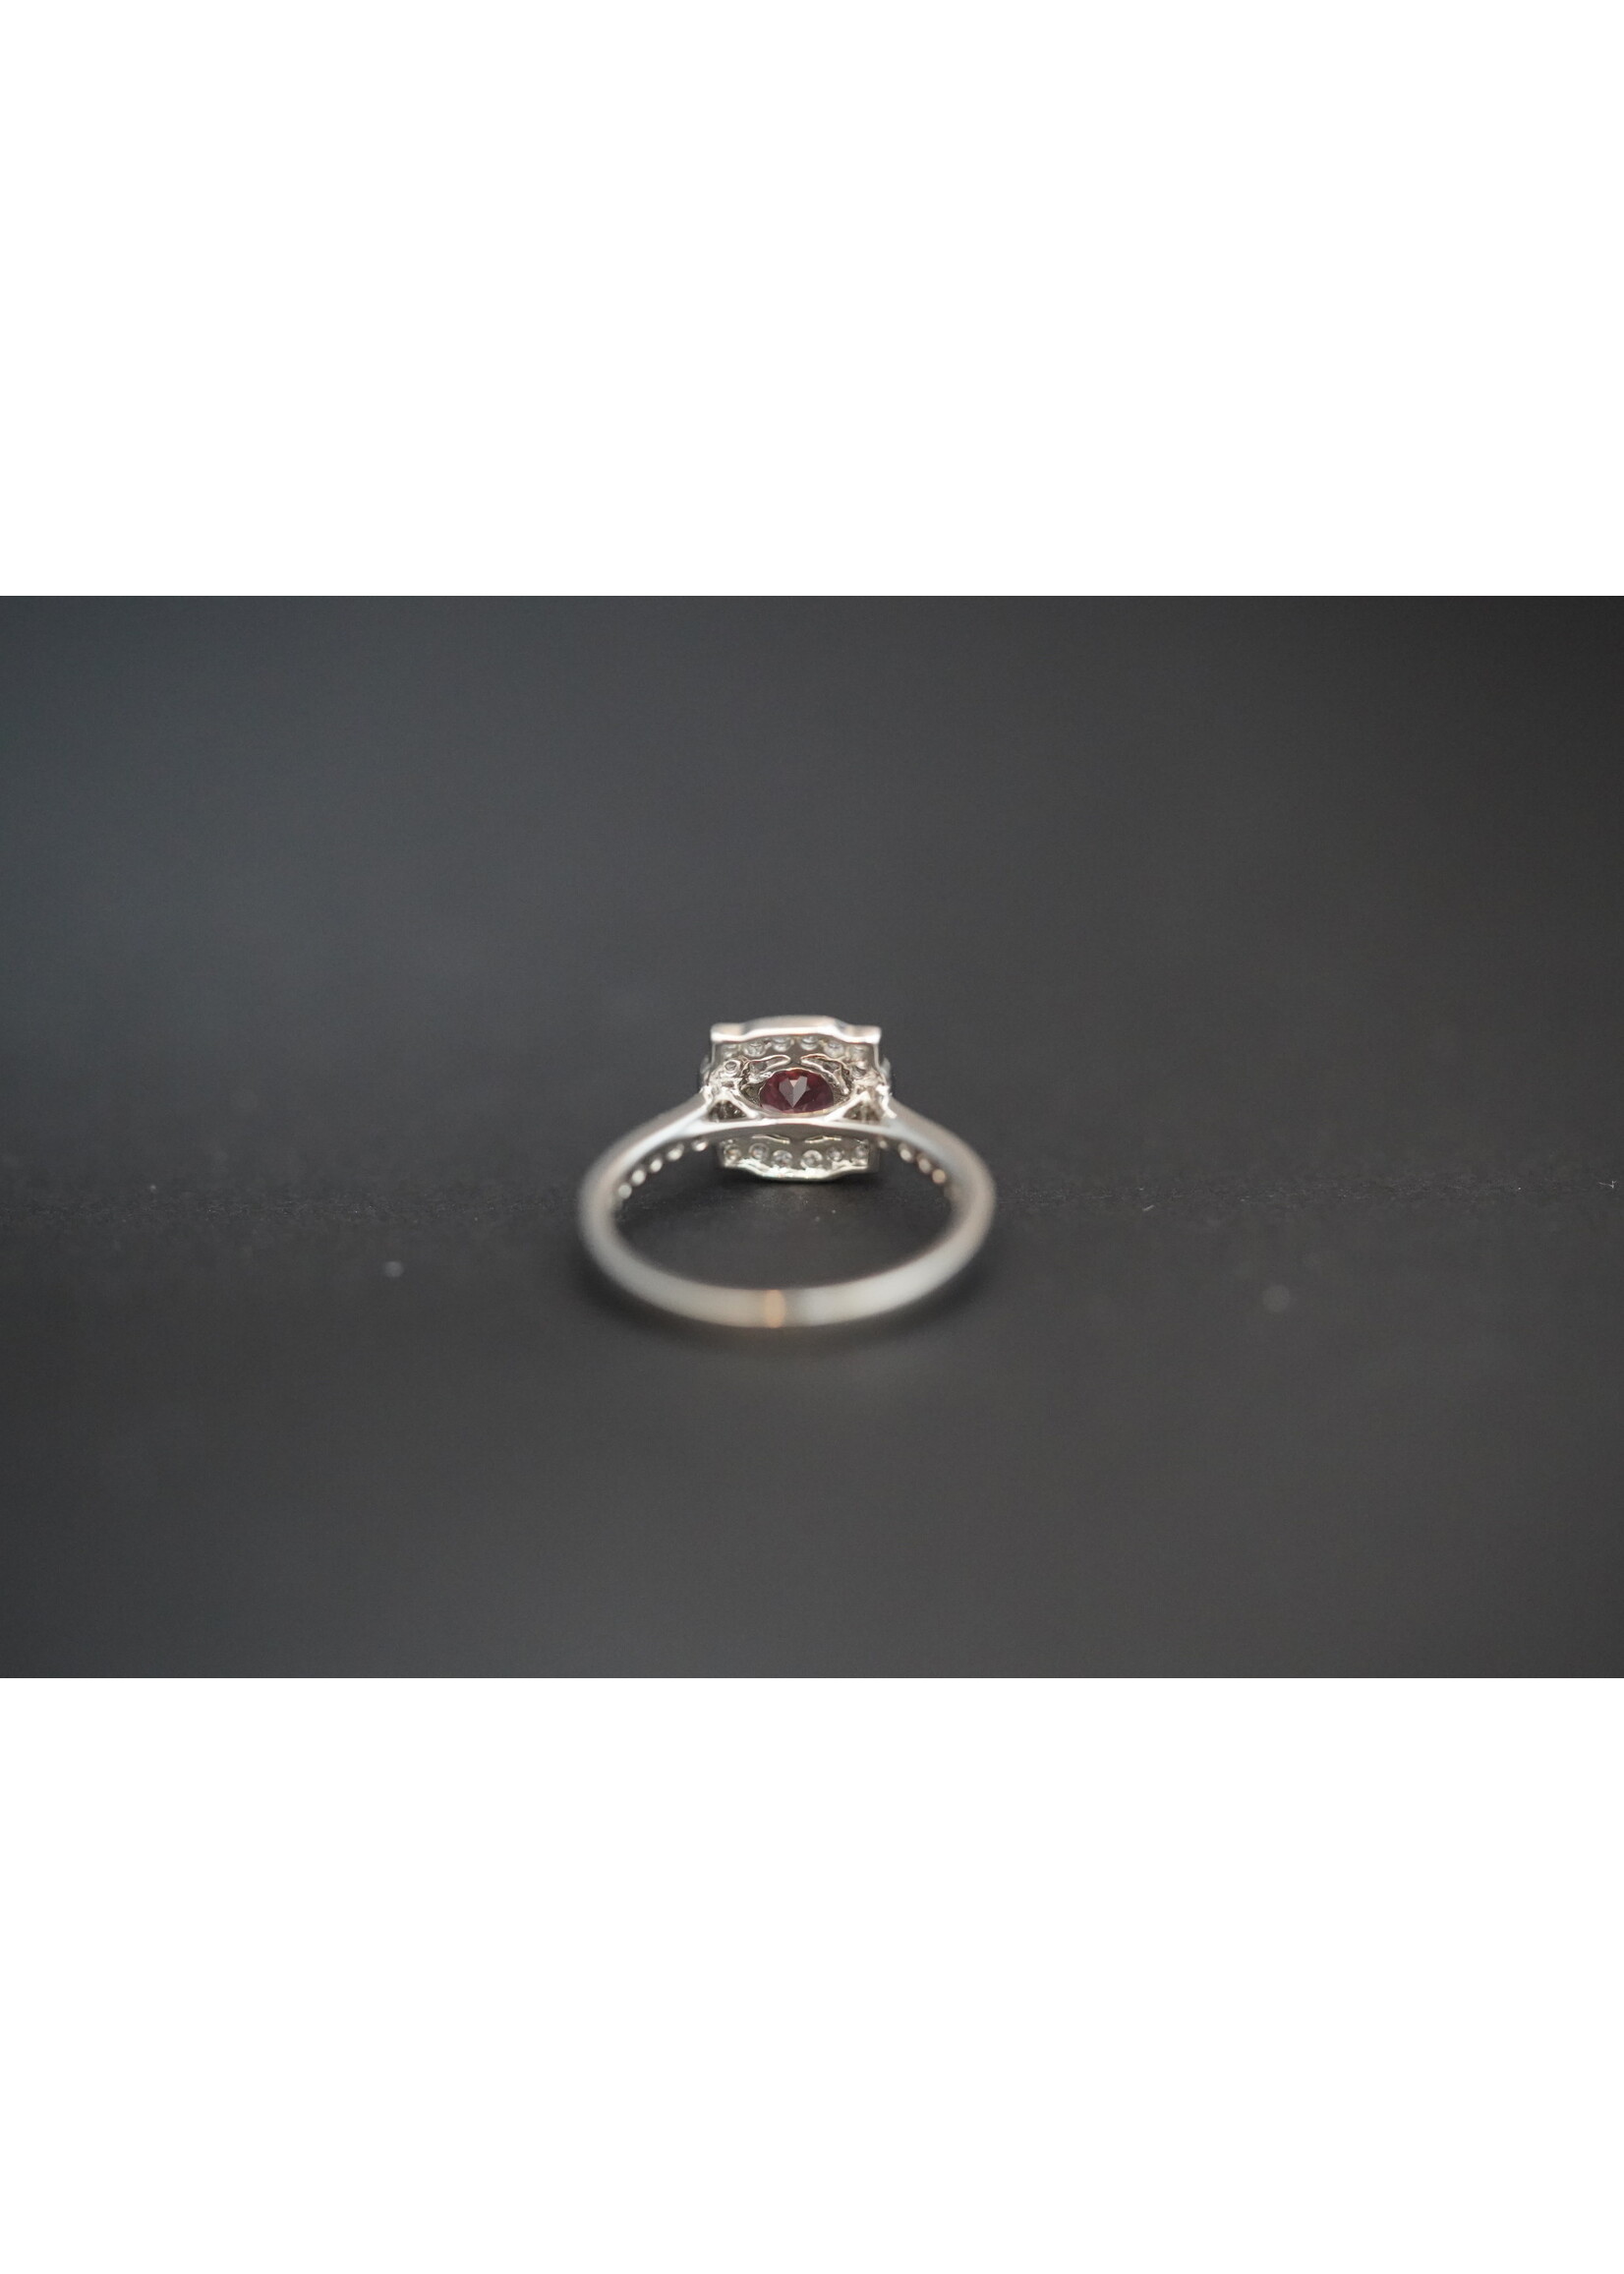 18KW 2.83g .87ctw (.60ctr) Purple/Pink Sapphire & Diamond Fashion Ring (size 6)